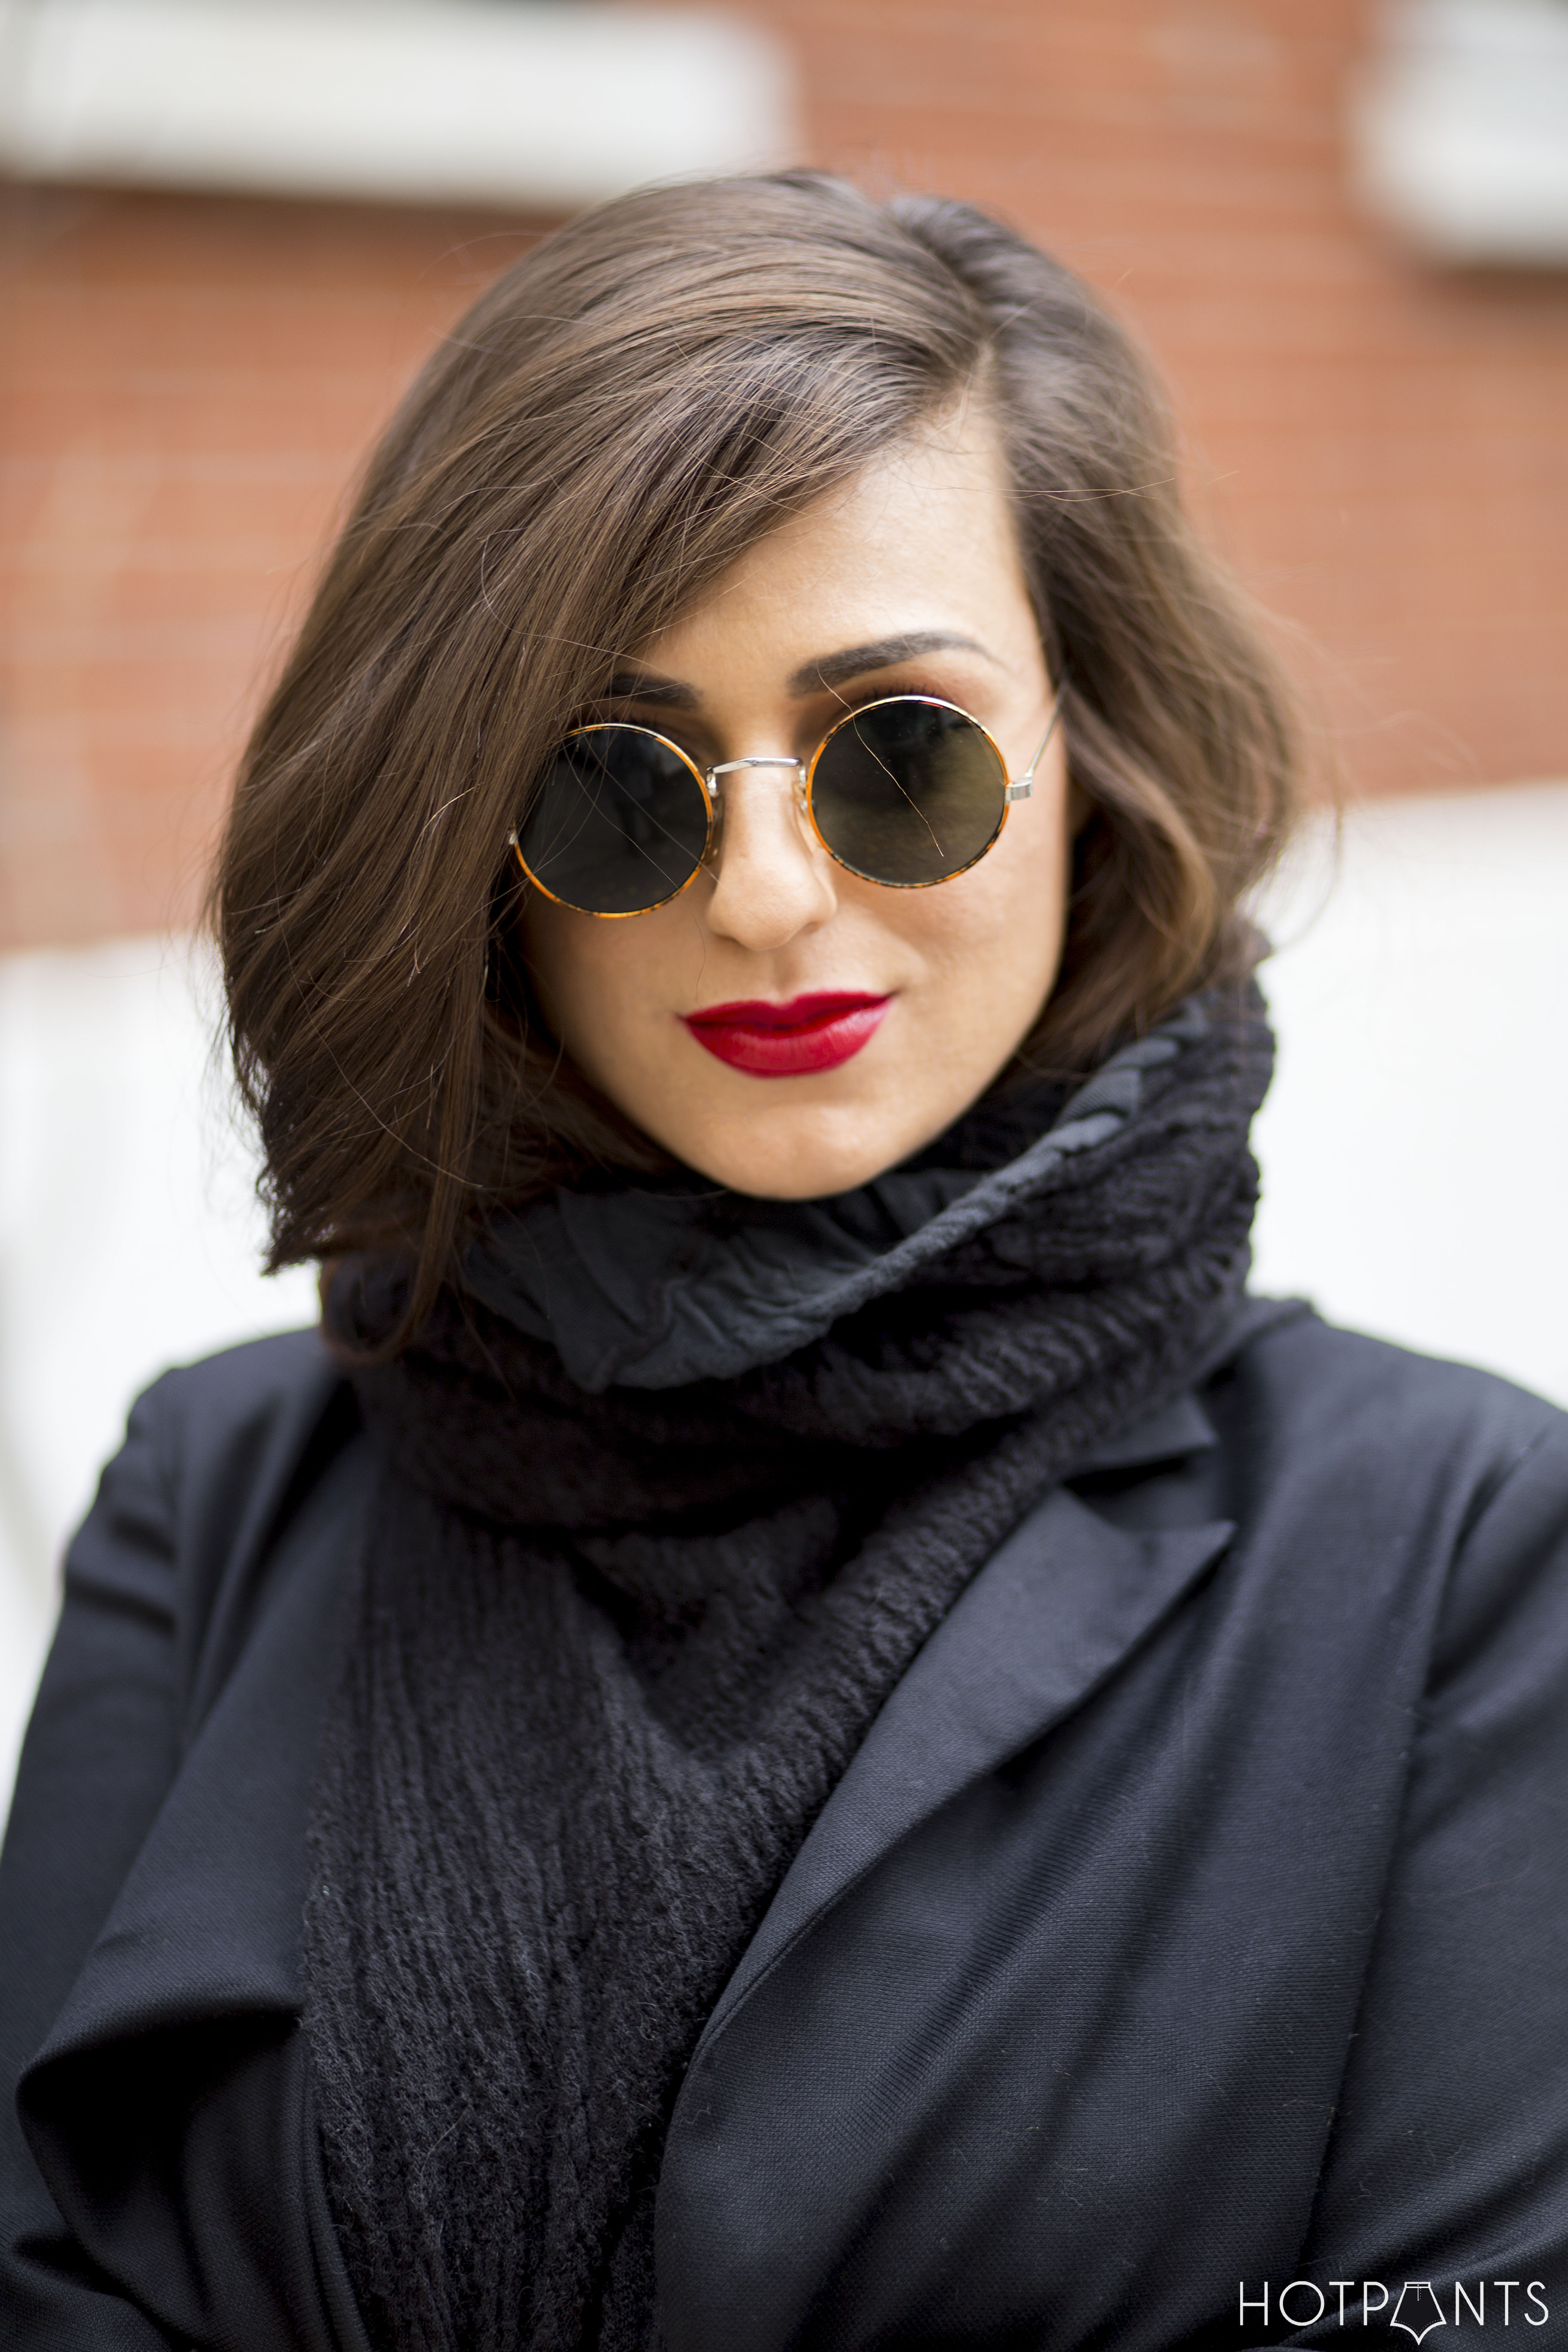 Long Hair Blogger New York City Winter Fashion